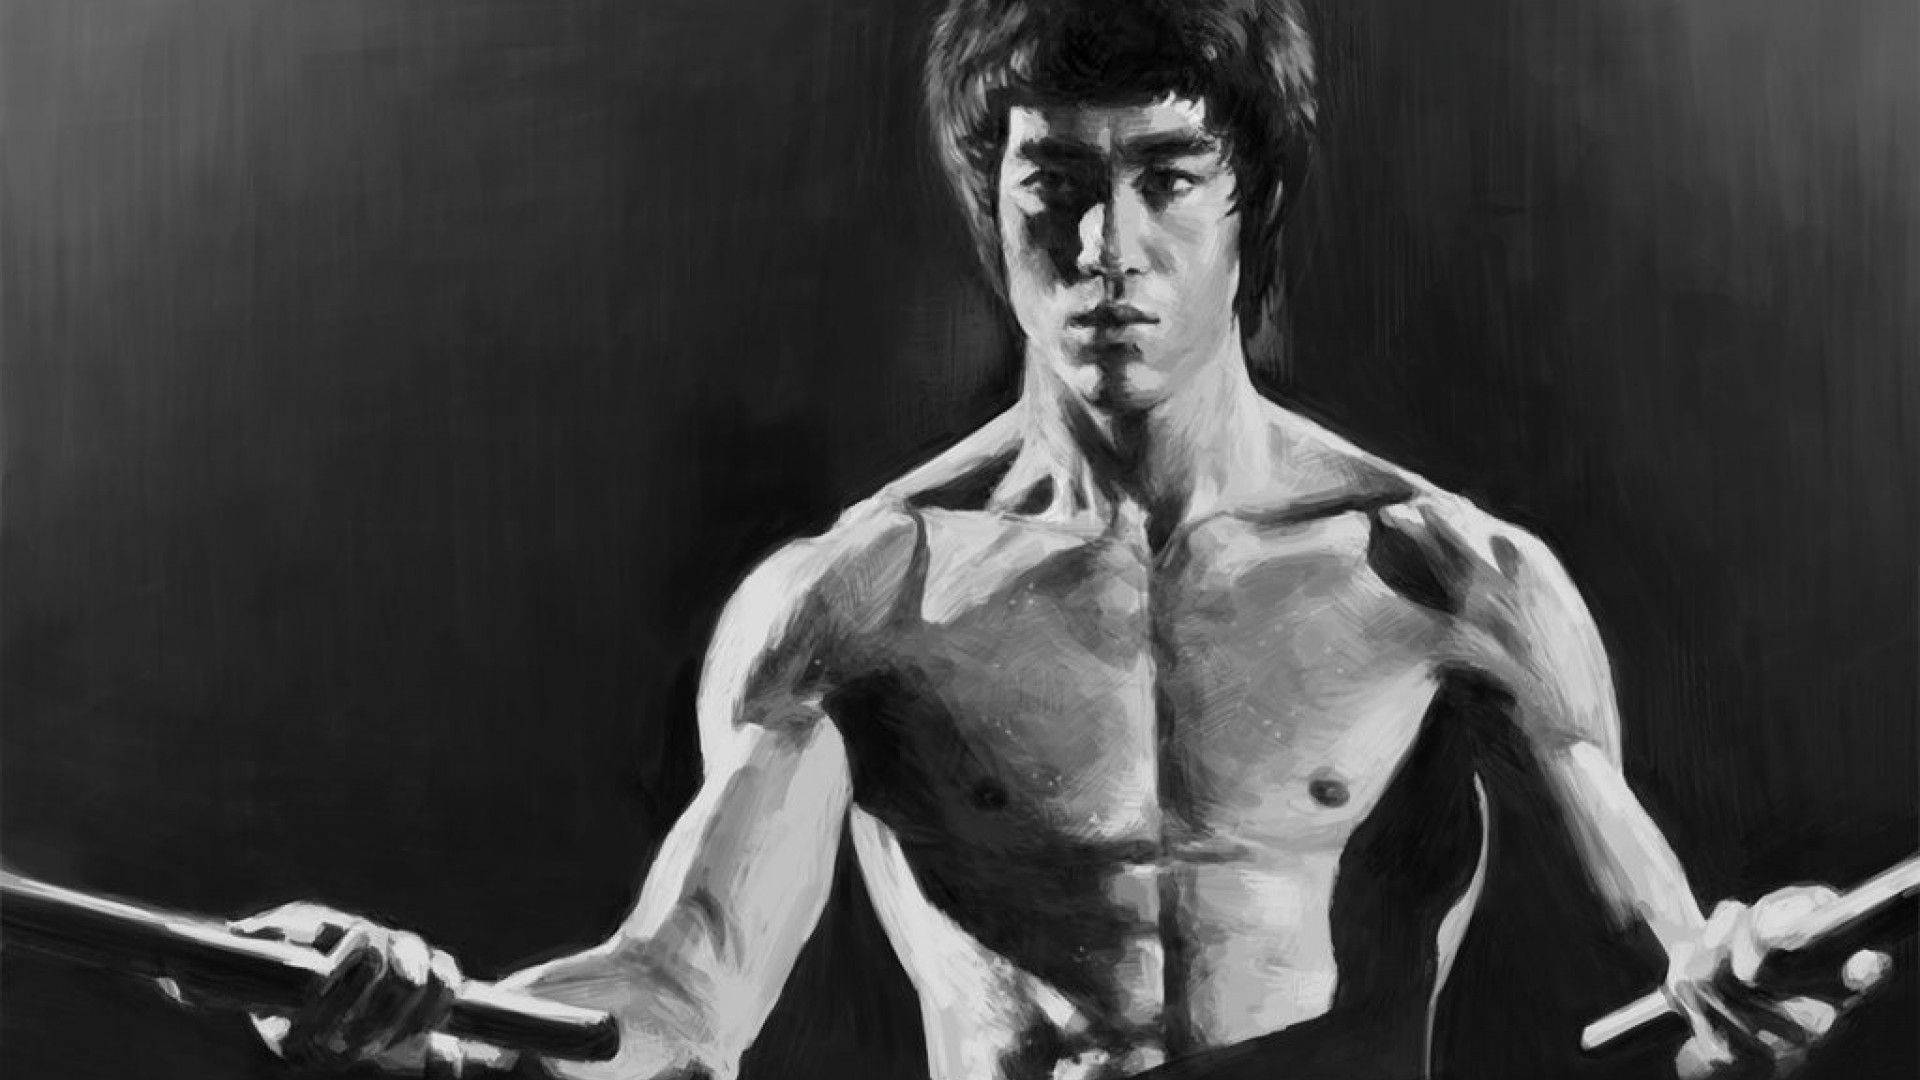 Bruce Lee Inspiring A Generation Background